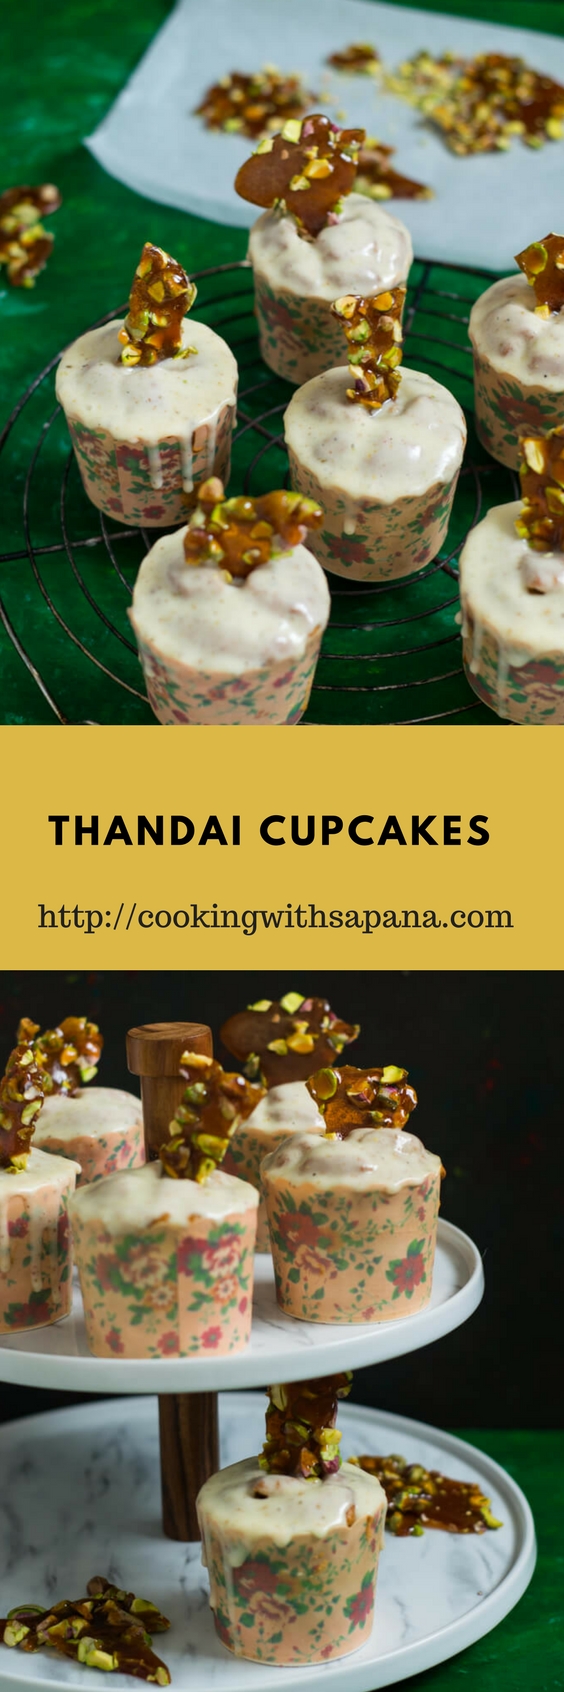 Thandai Cupcakes with Yogurt Glaze-3